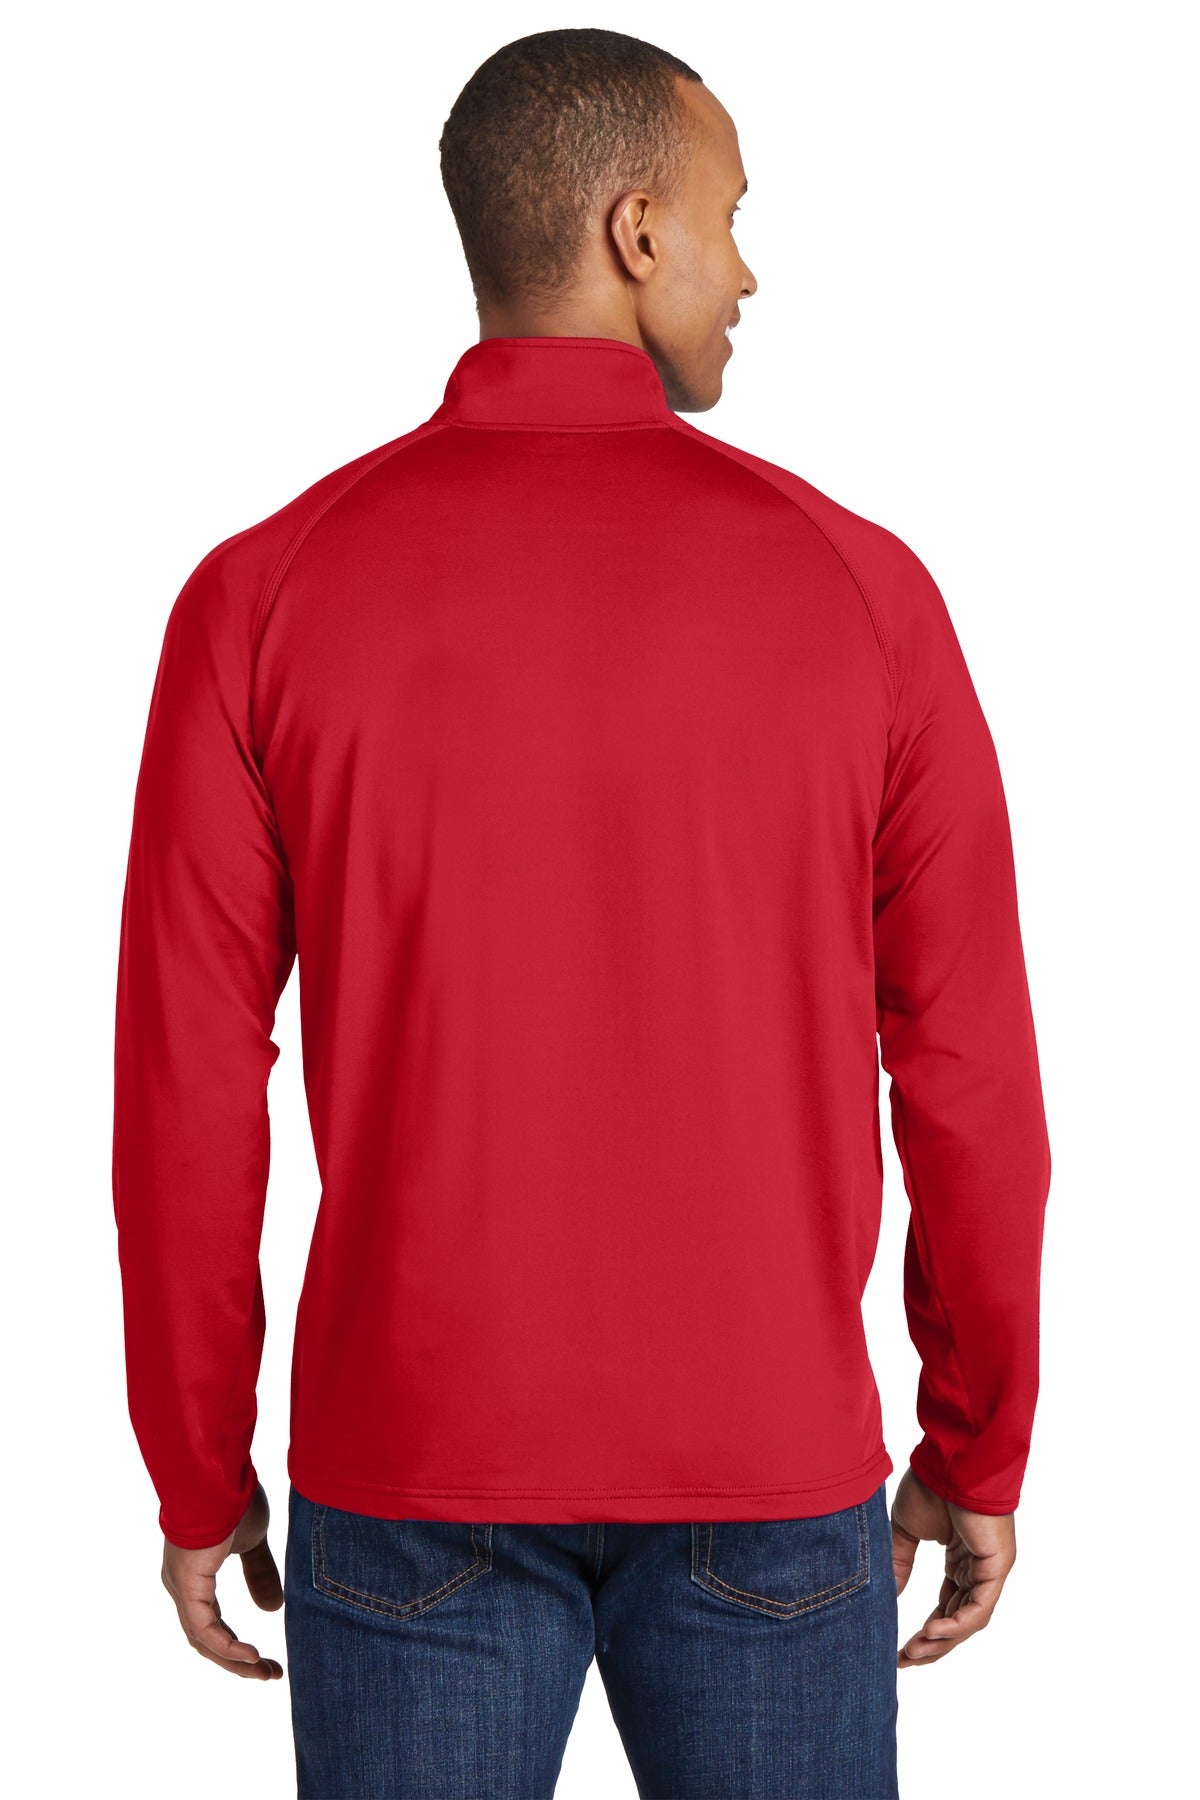 Swaasi Core - Sport-Tek® TALL Sport-Wick® Stretch 1/2-Zip Pullover Tall with EMB Logo